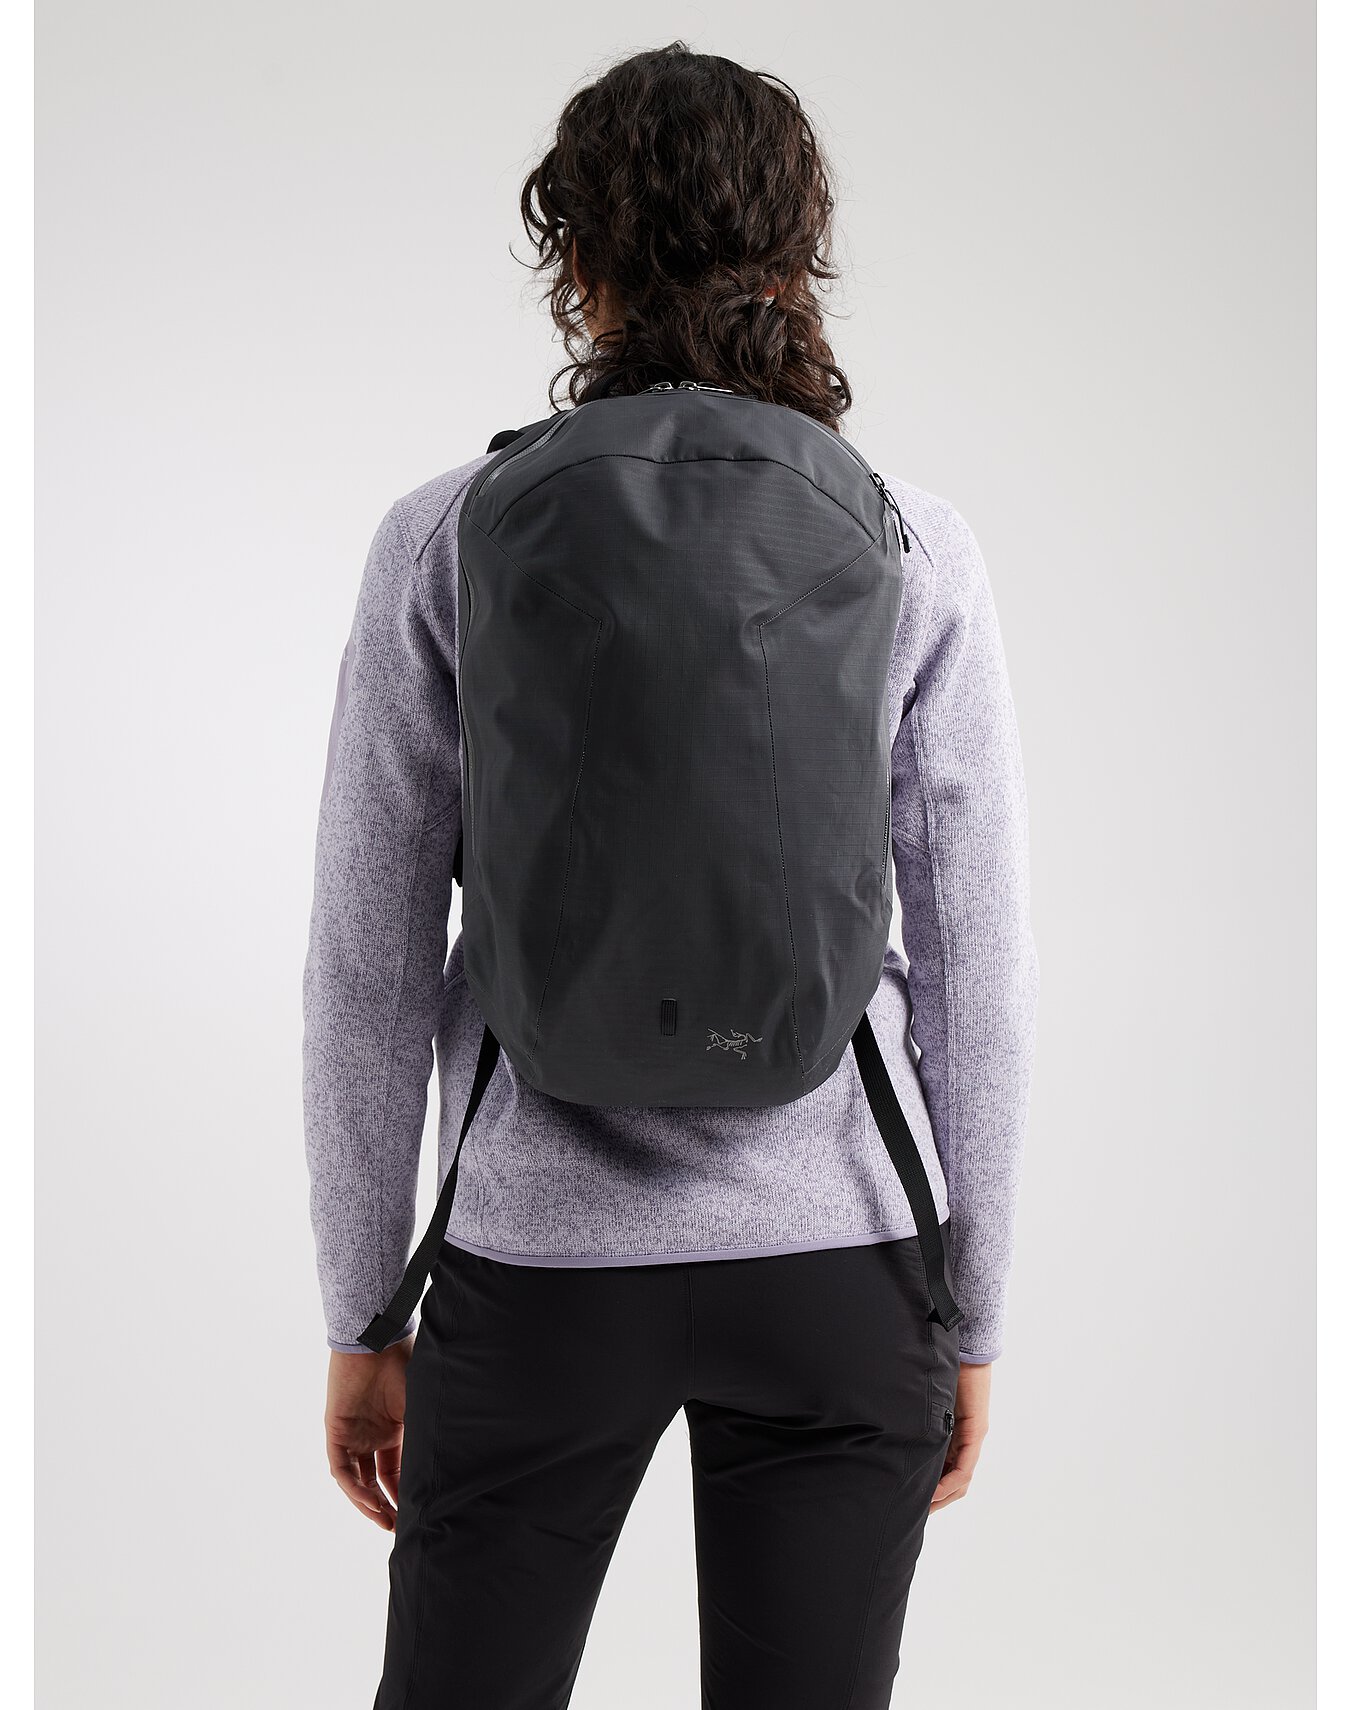 Granville 16 Backpack | Arc'teryx